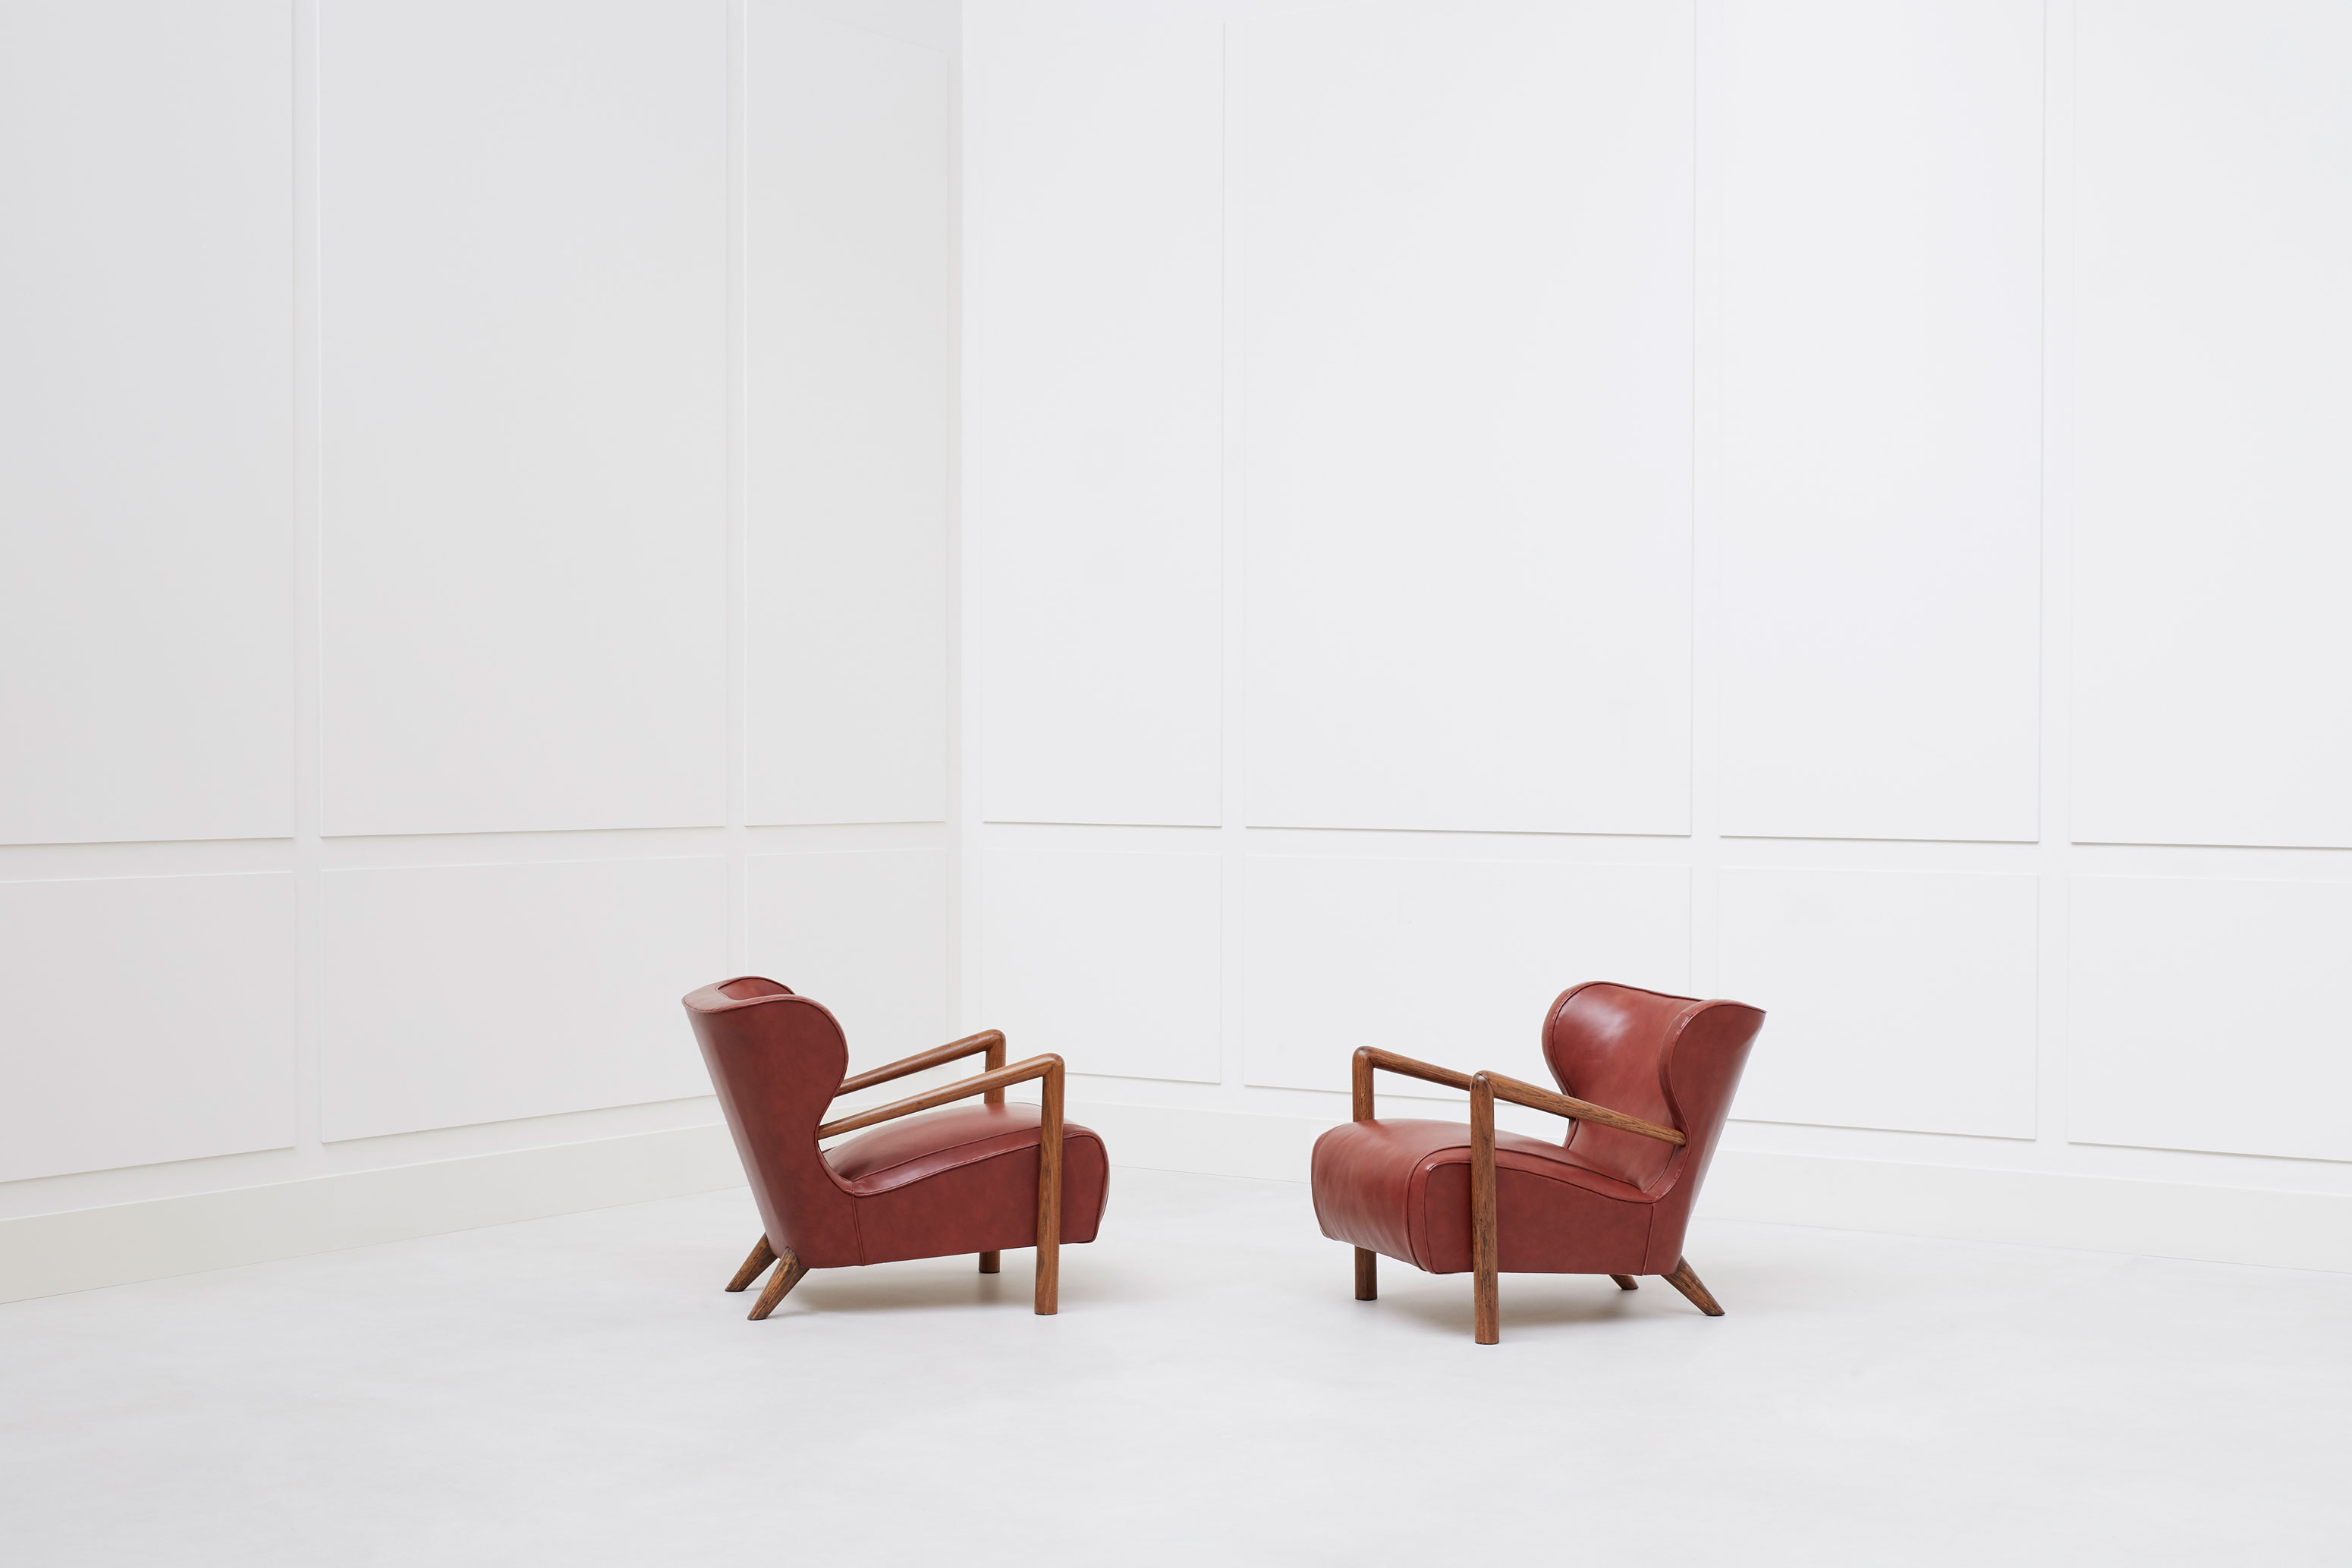 Jean Royère, Pair of armchairs, vue 04